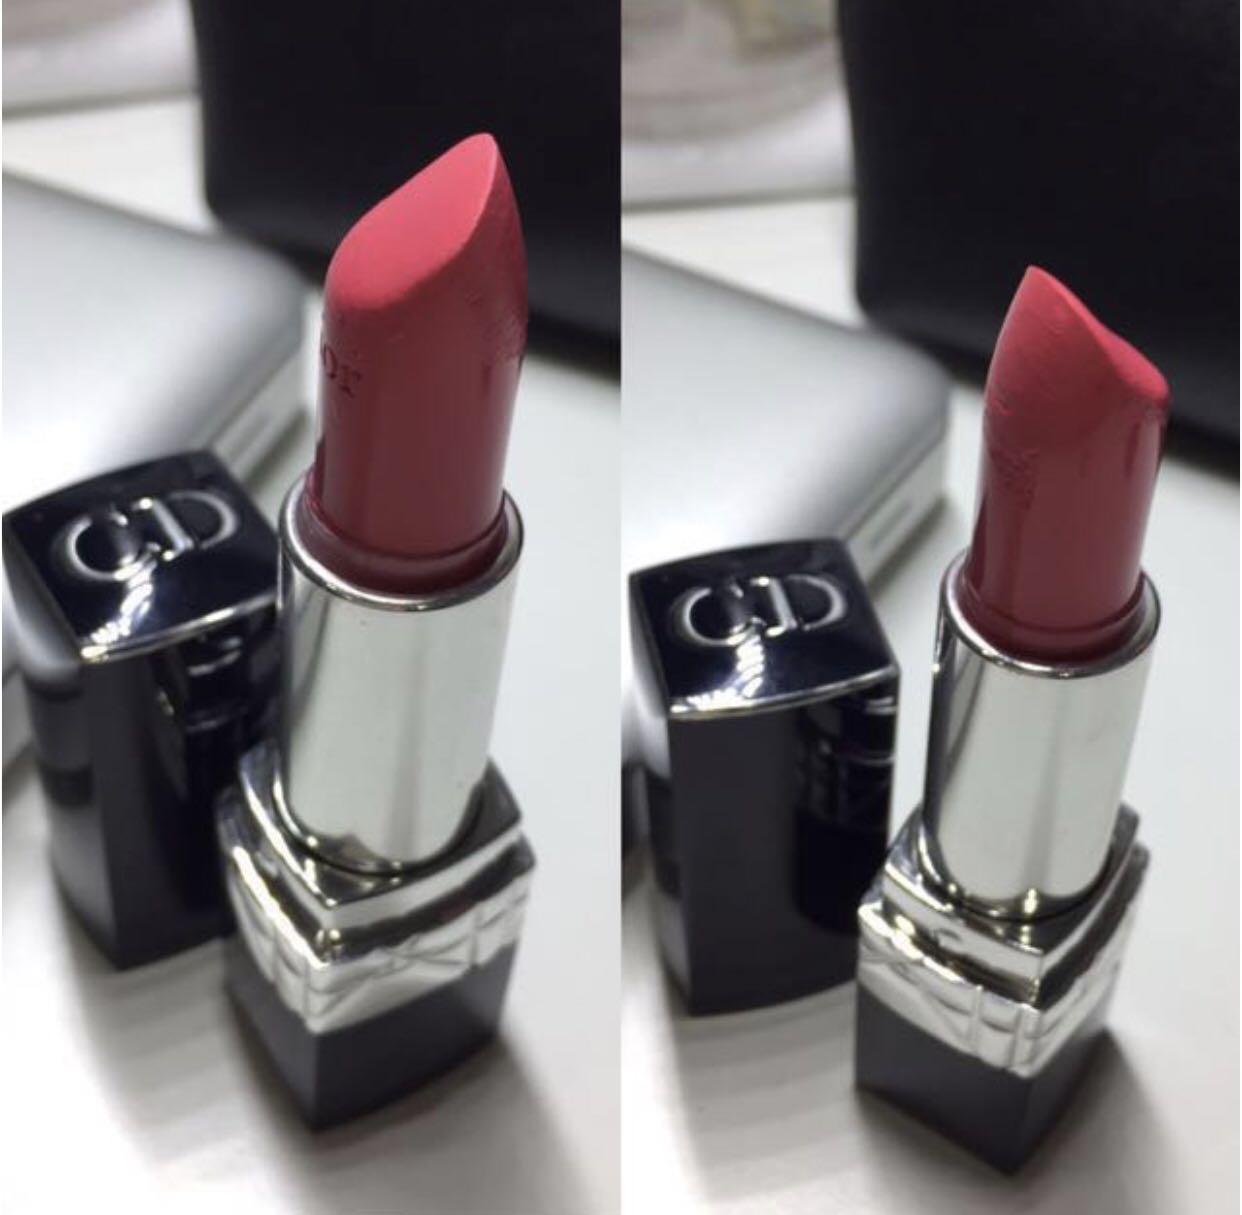 dior 567 lipstick